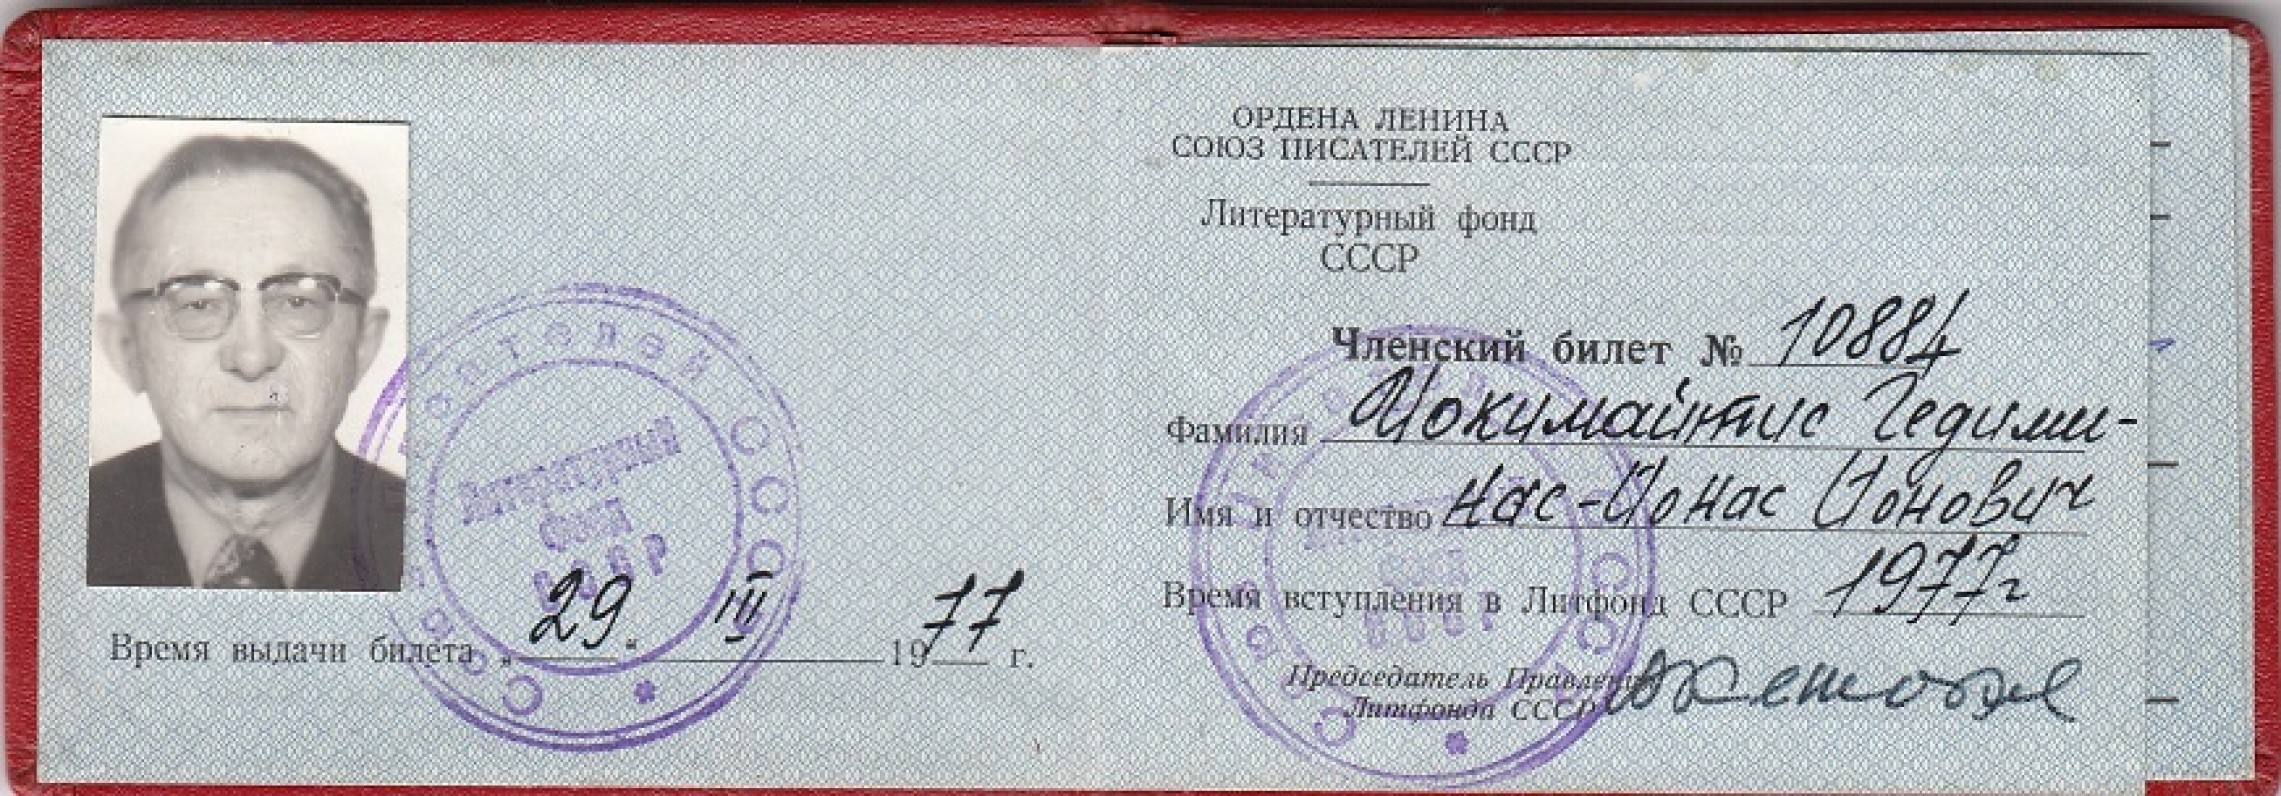 SSRS literatūros fondo nario bilietas